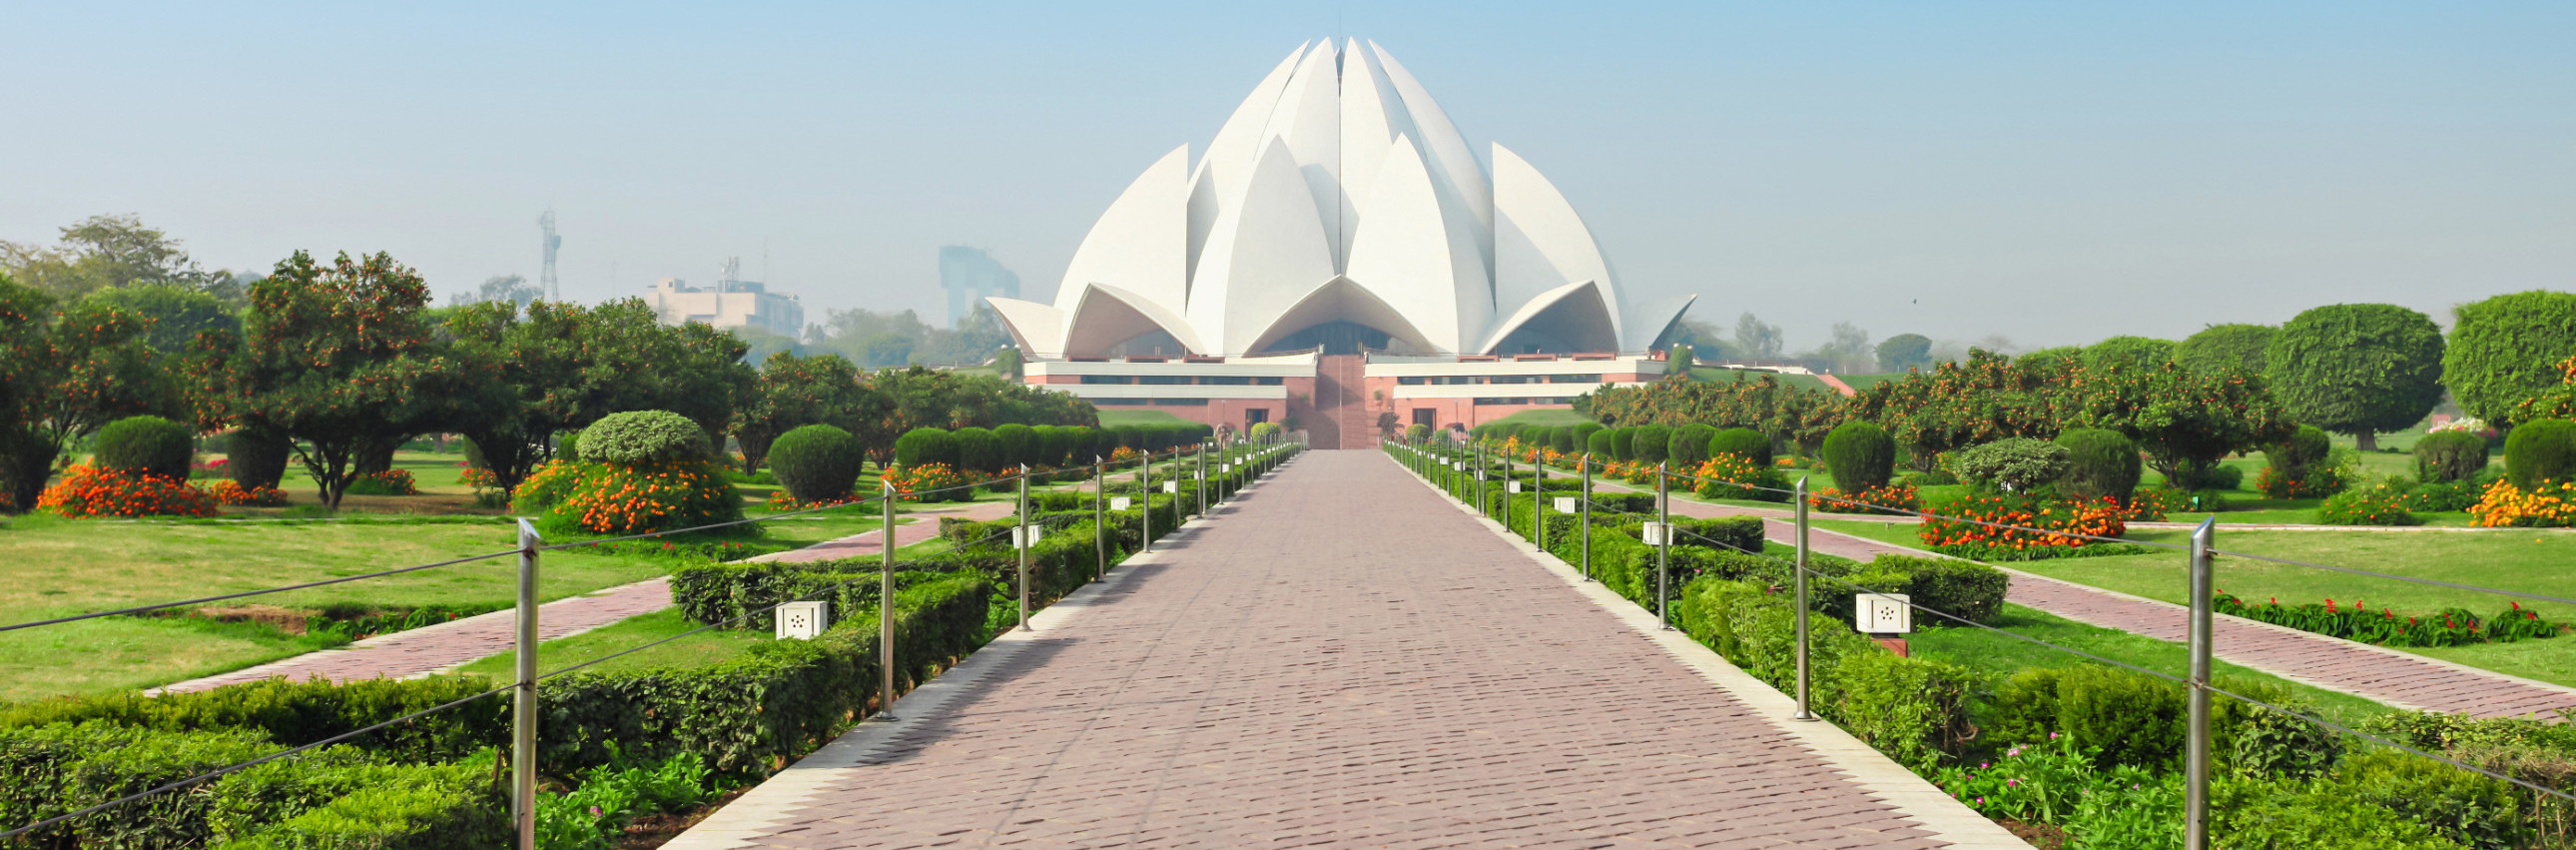 Best Places To Visit In New Delhi, Delhi Tourist Places | The LaLiT New